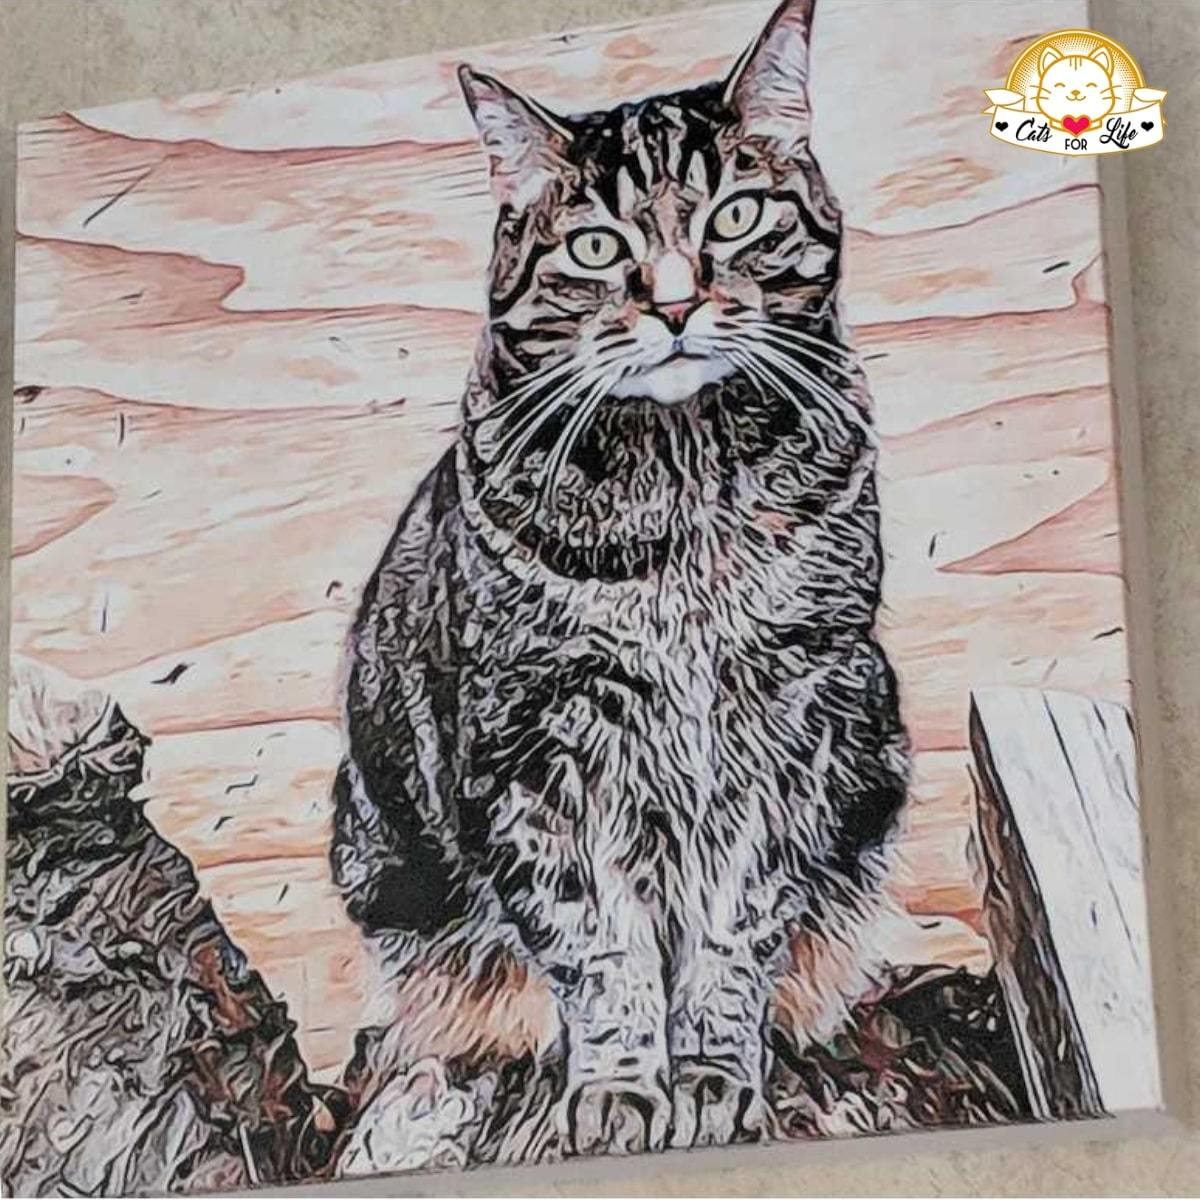 #1 Personalized Memorial Cat Canvas - Keeping Memories Alive